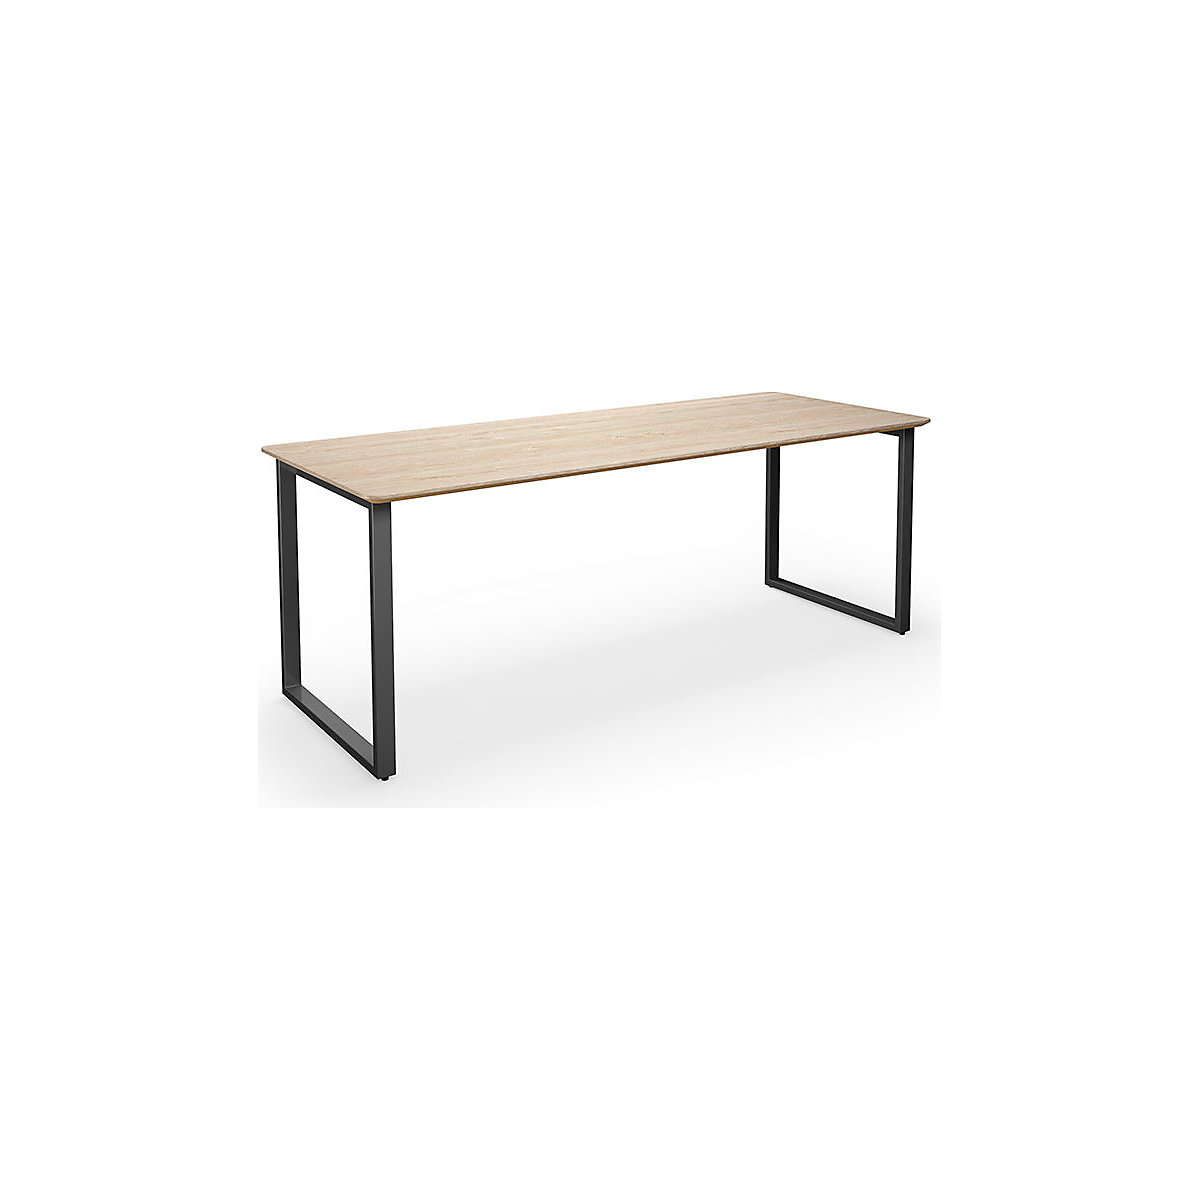 DUO-O Trend multi-purpose desk, straight tabletop, rounded corners, WxD 2000 x 800 mm, oak, black-1